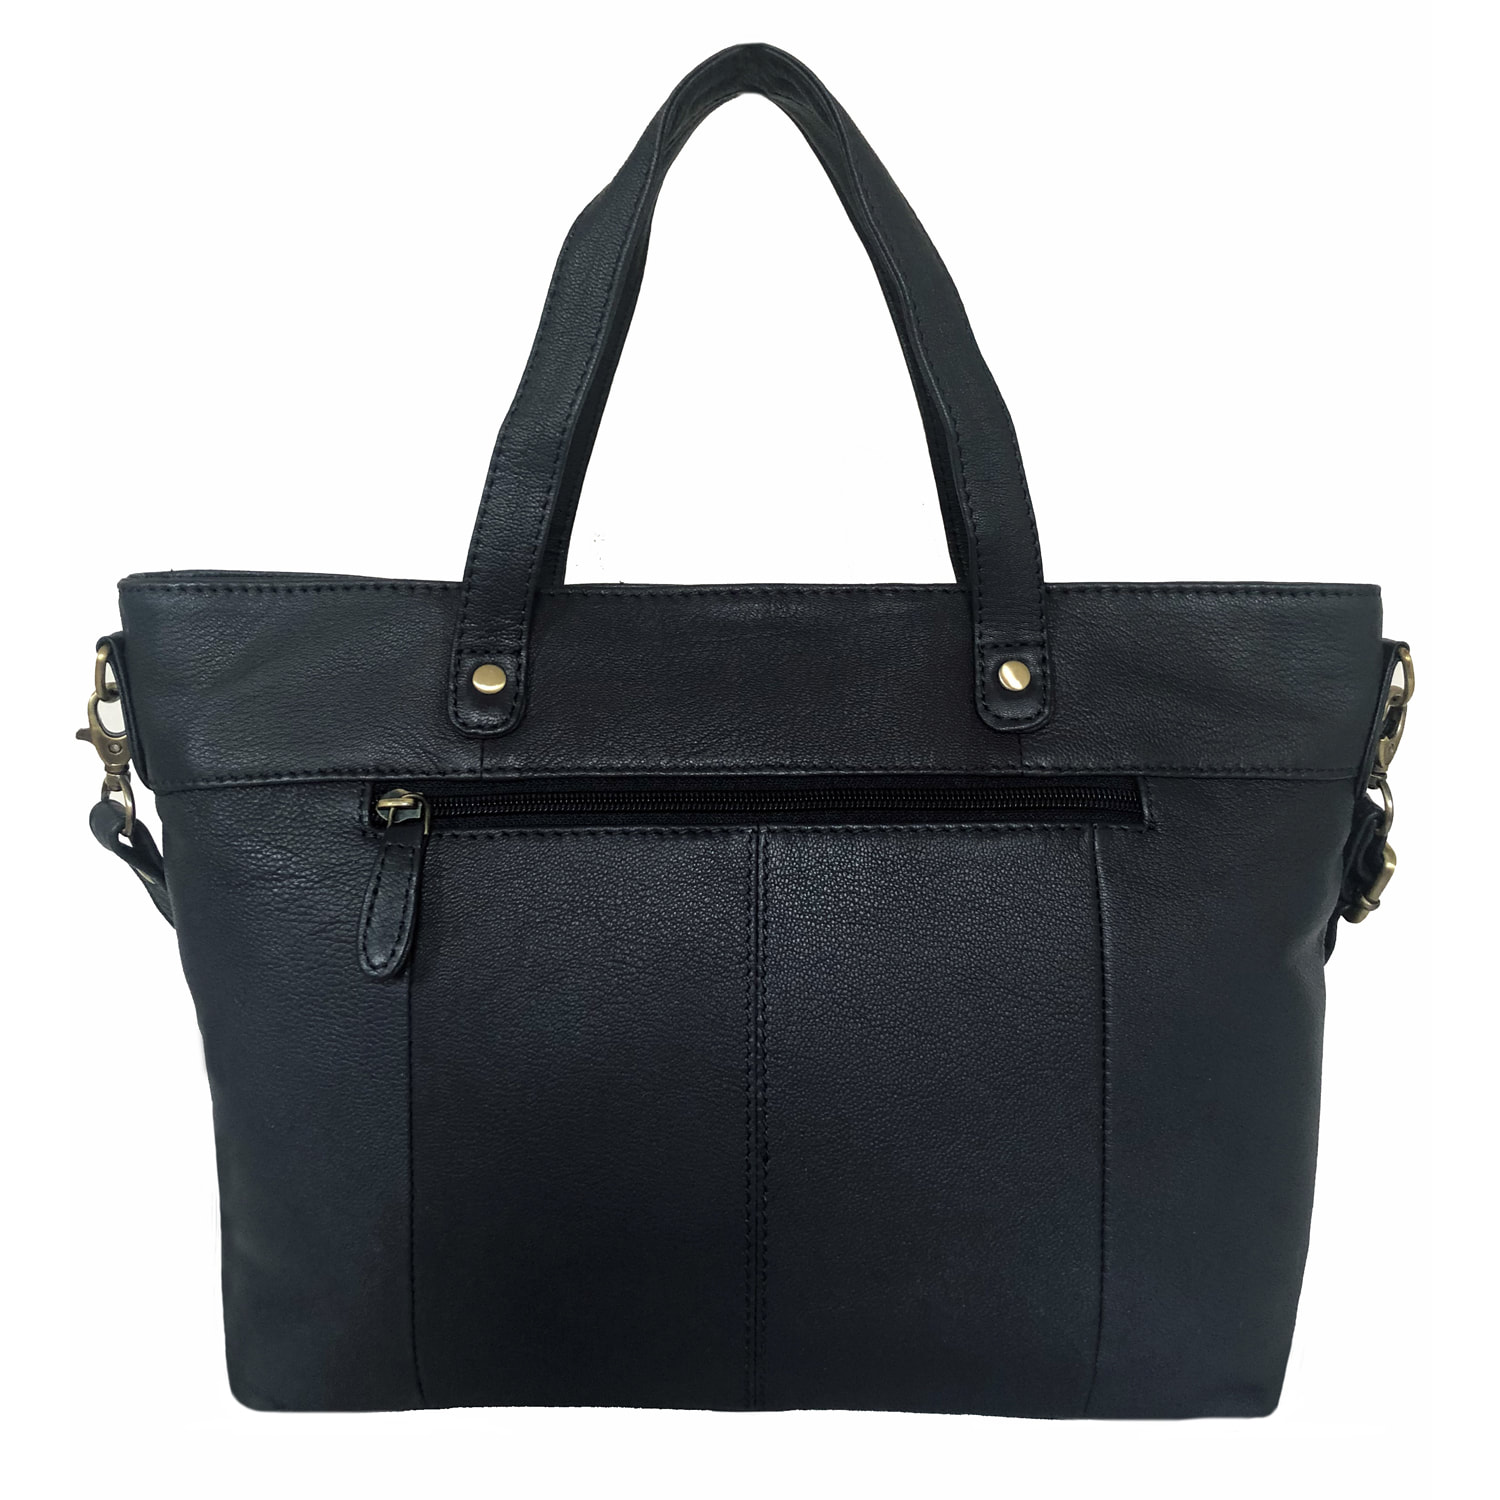 Rowallan Navy Blue Leather Shoulder Bag, Handbag, Grab Bag